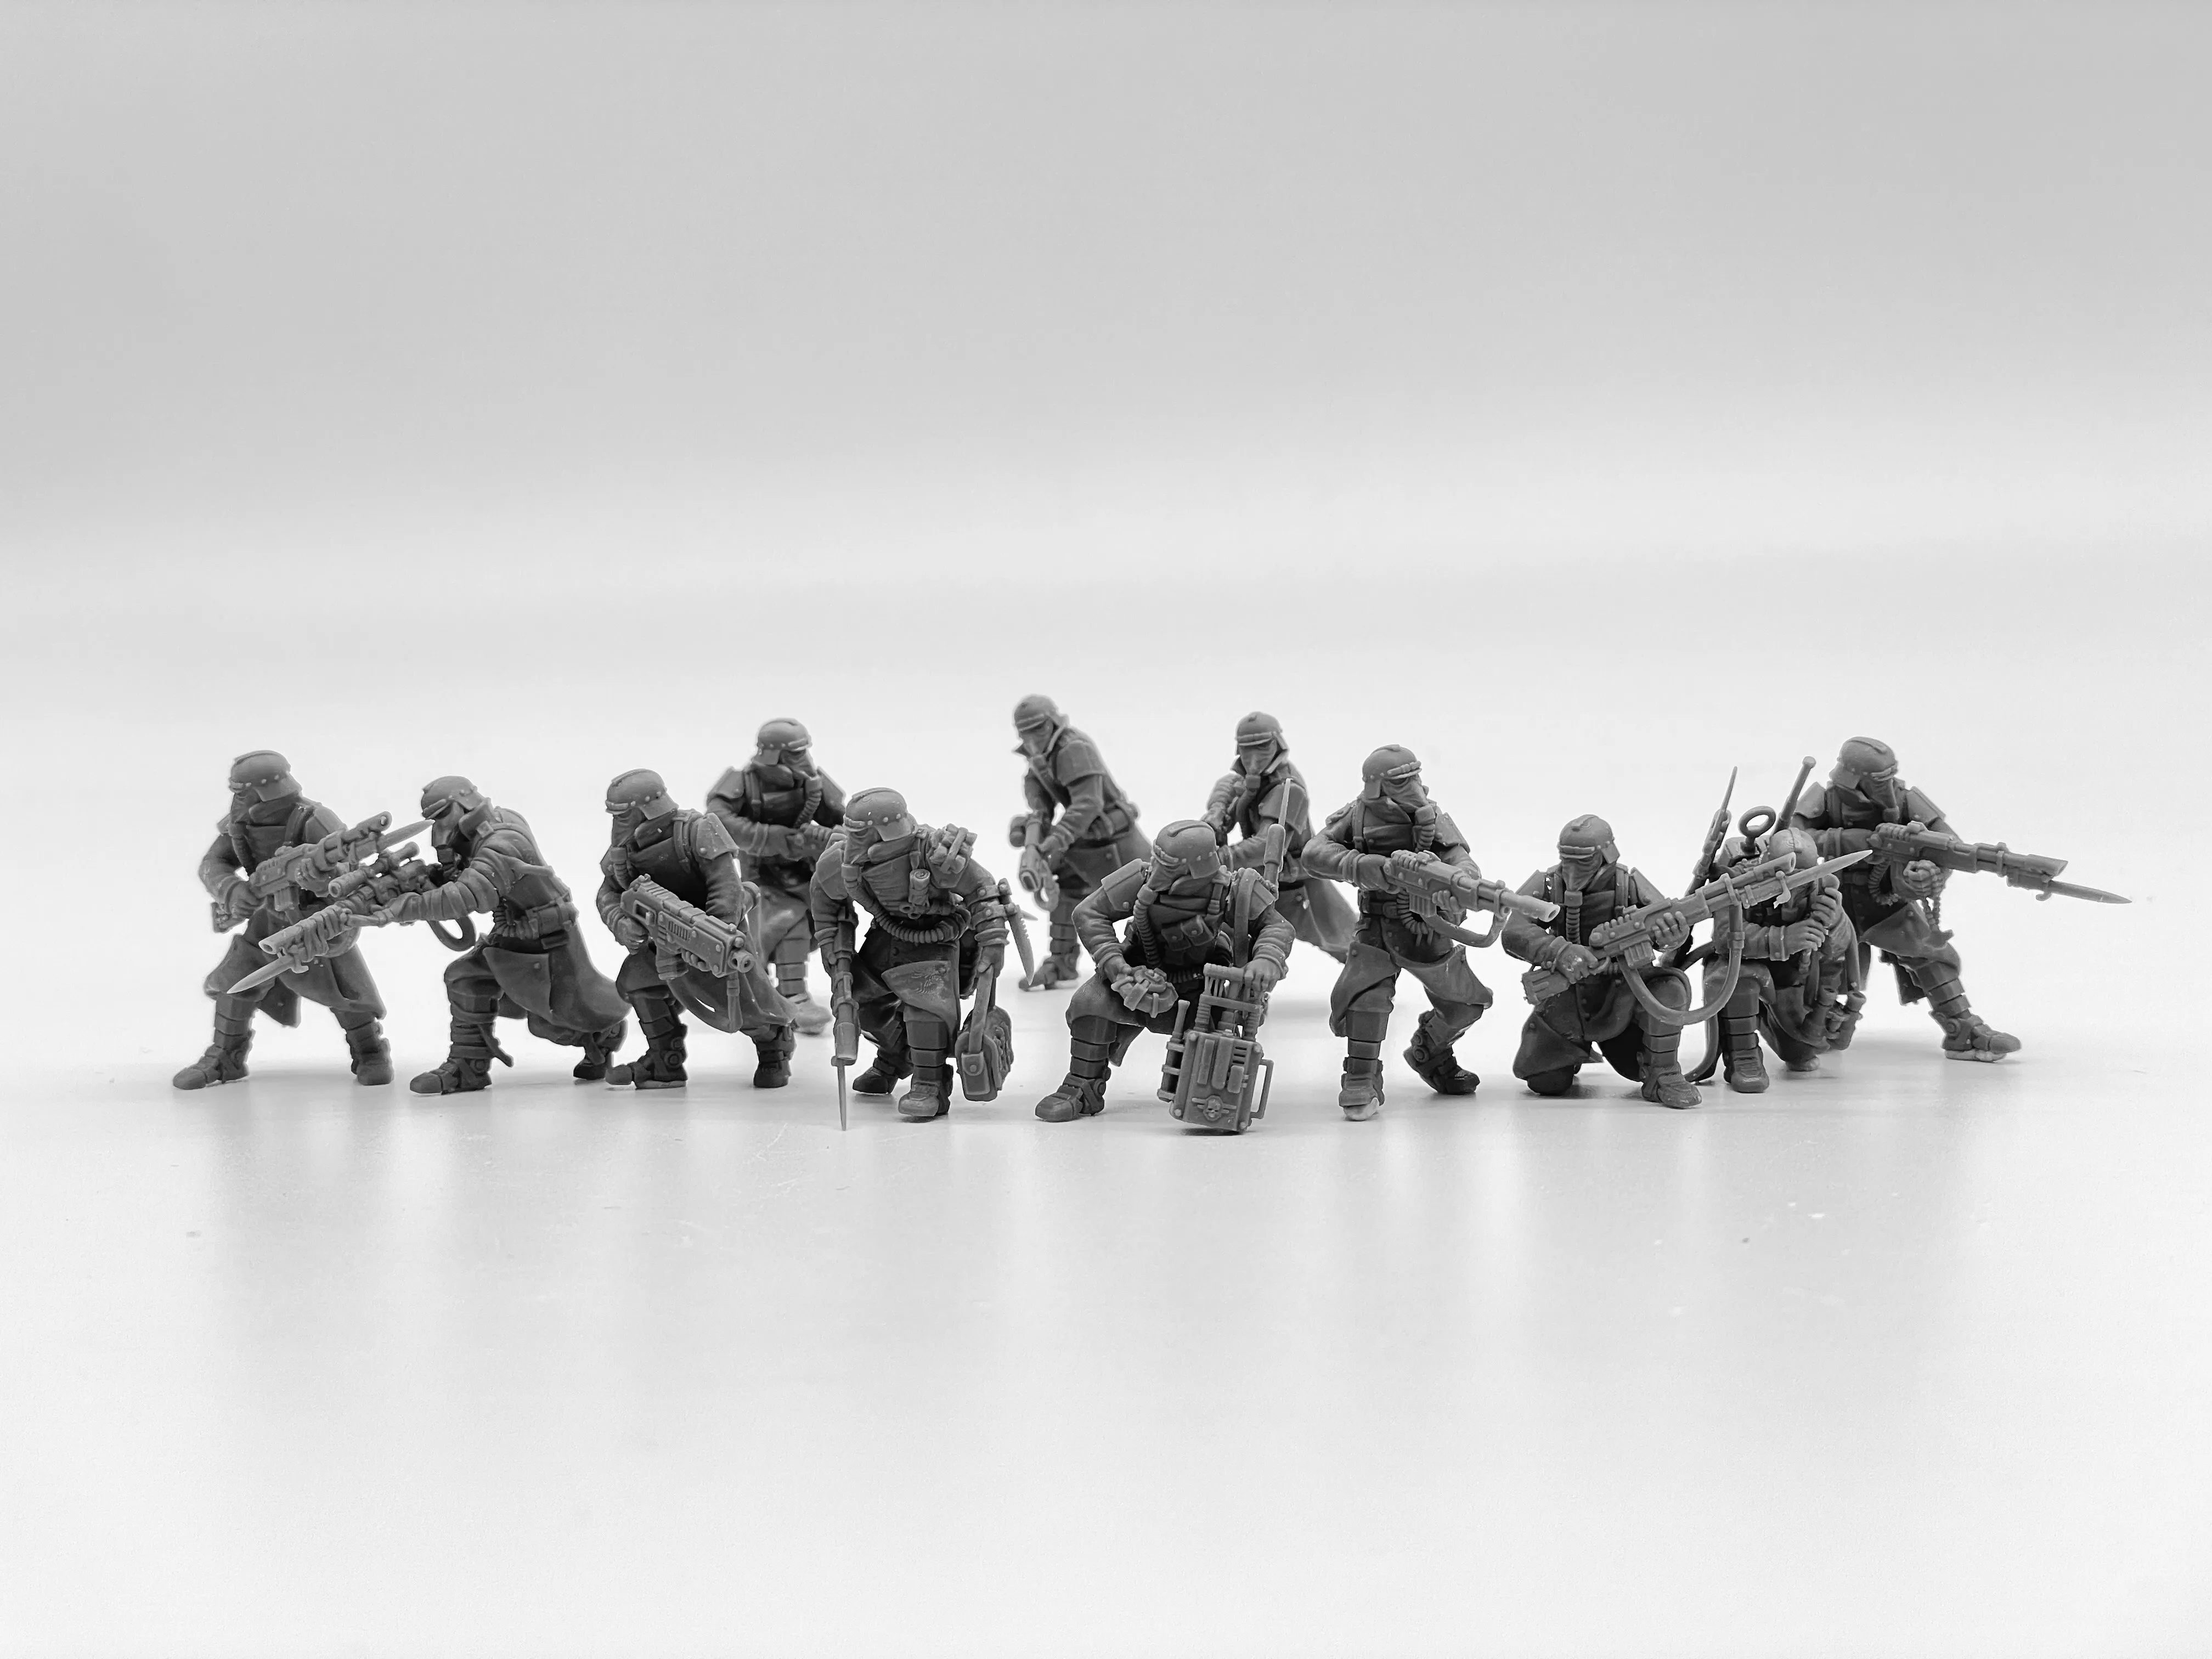 Imperial Force Death Division Kill Harts Model Kit Miniature War Gaming Omålad soldatfigurer 28mm Scale Tabletop Gaming